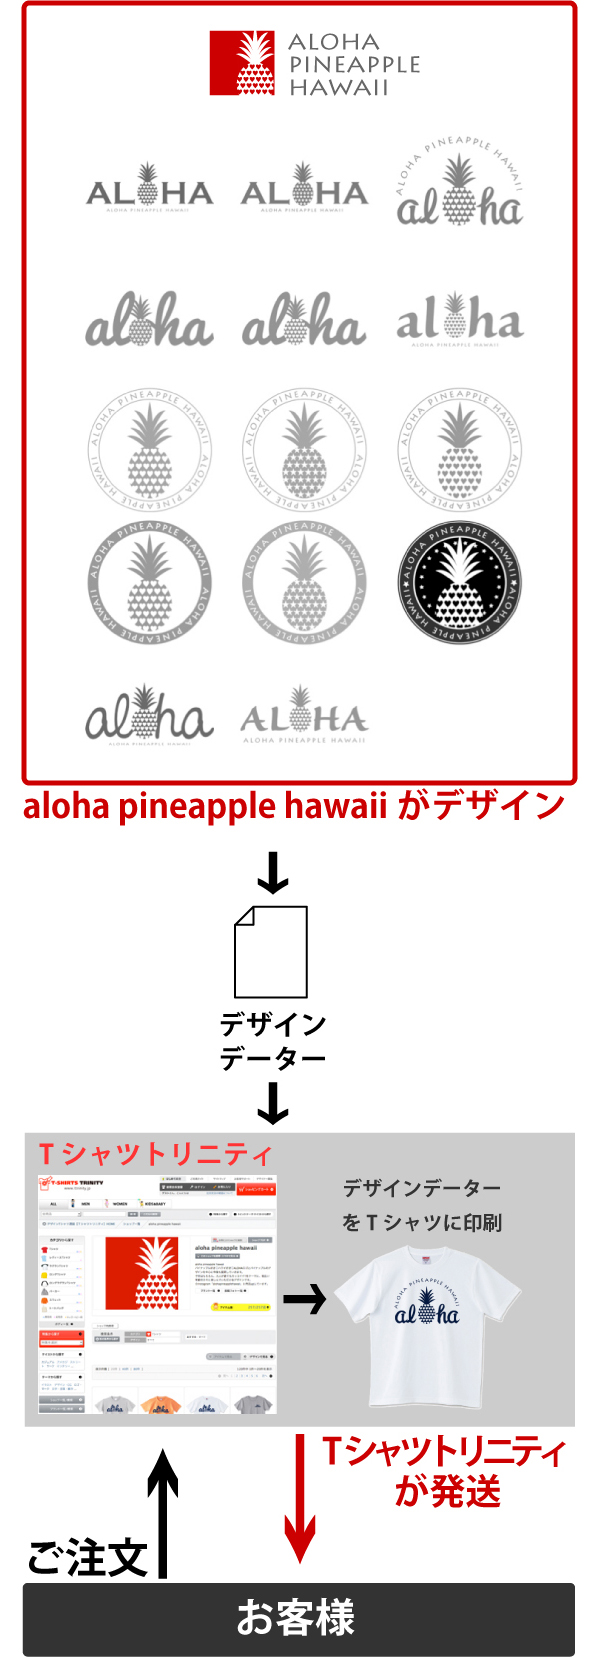 Aloha Pineapple Hawaii 製品について Alohaロゴとパイナップルのイラストデザイン